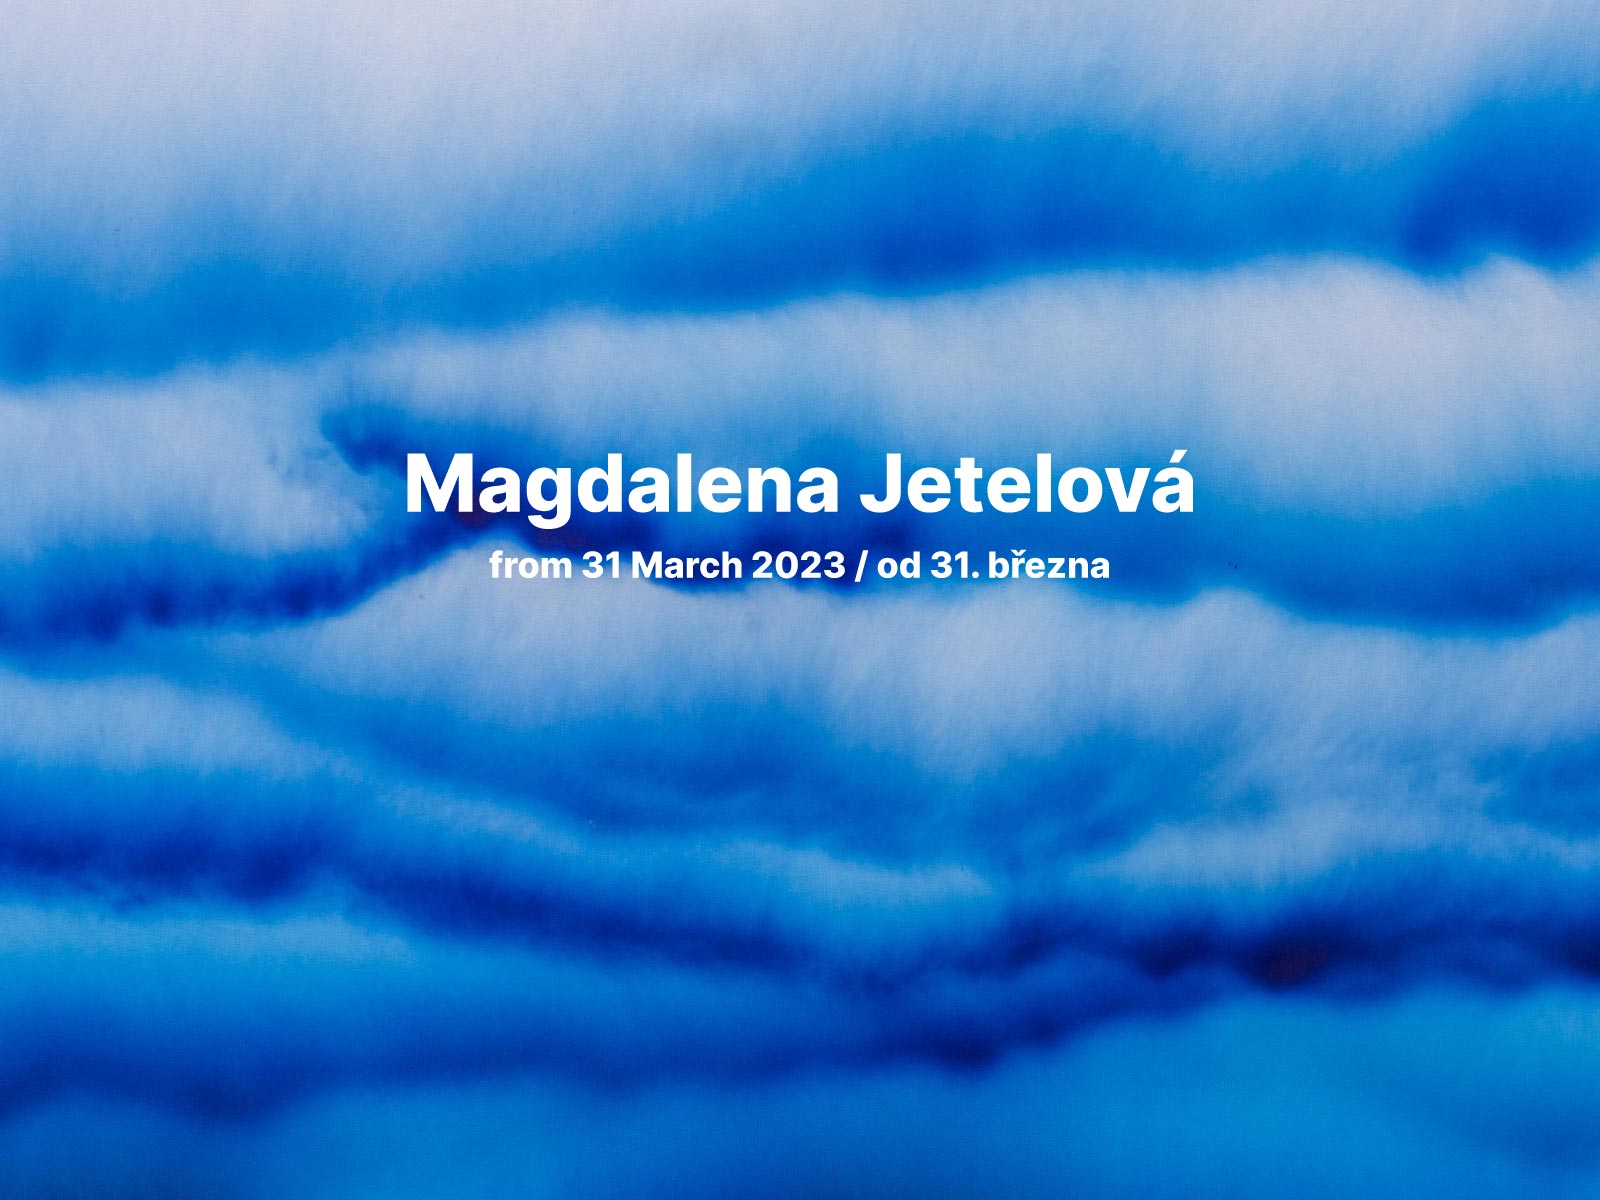 Magdalena Jetelova / THE LIE OF THE LAND